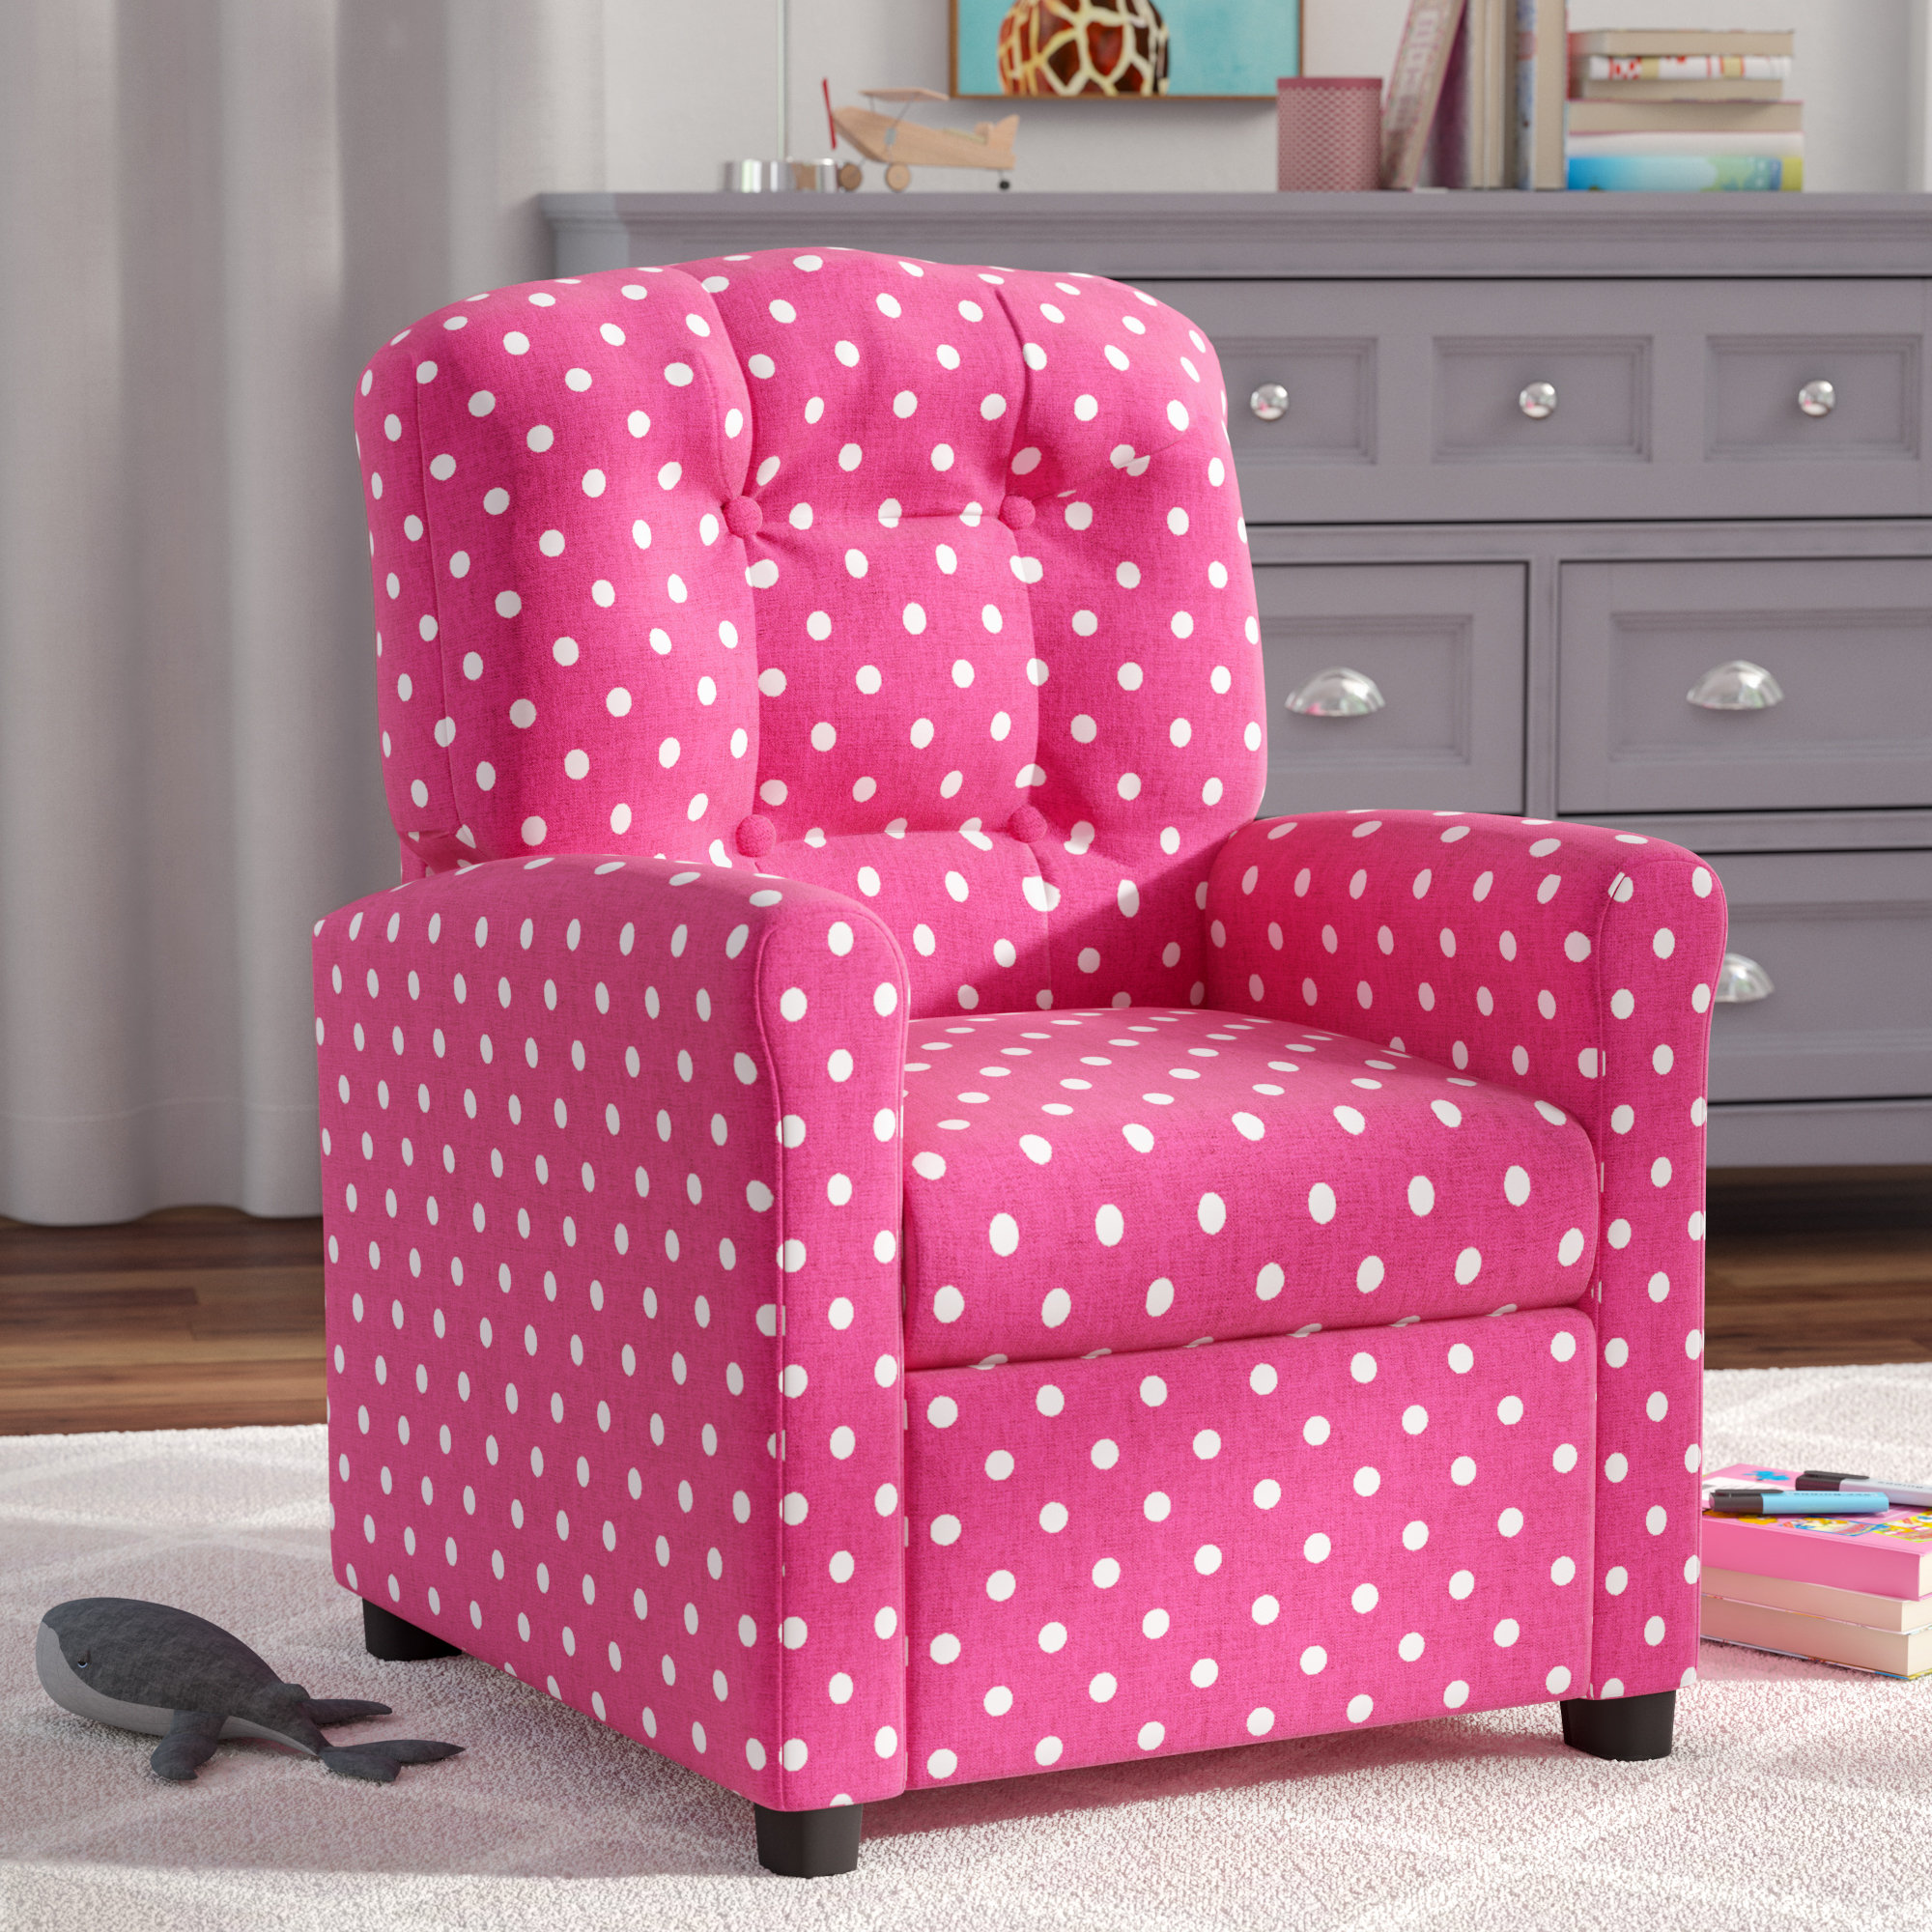 mini recliner chair